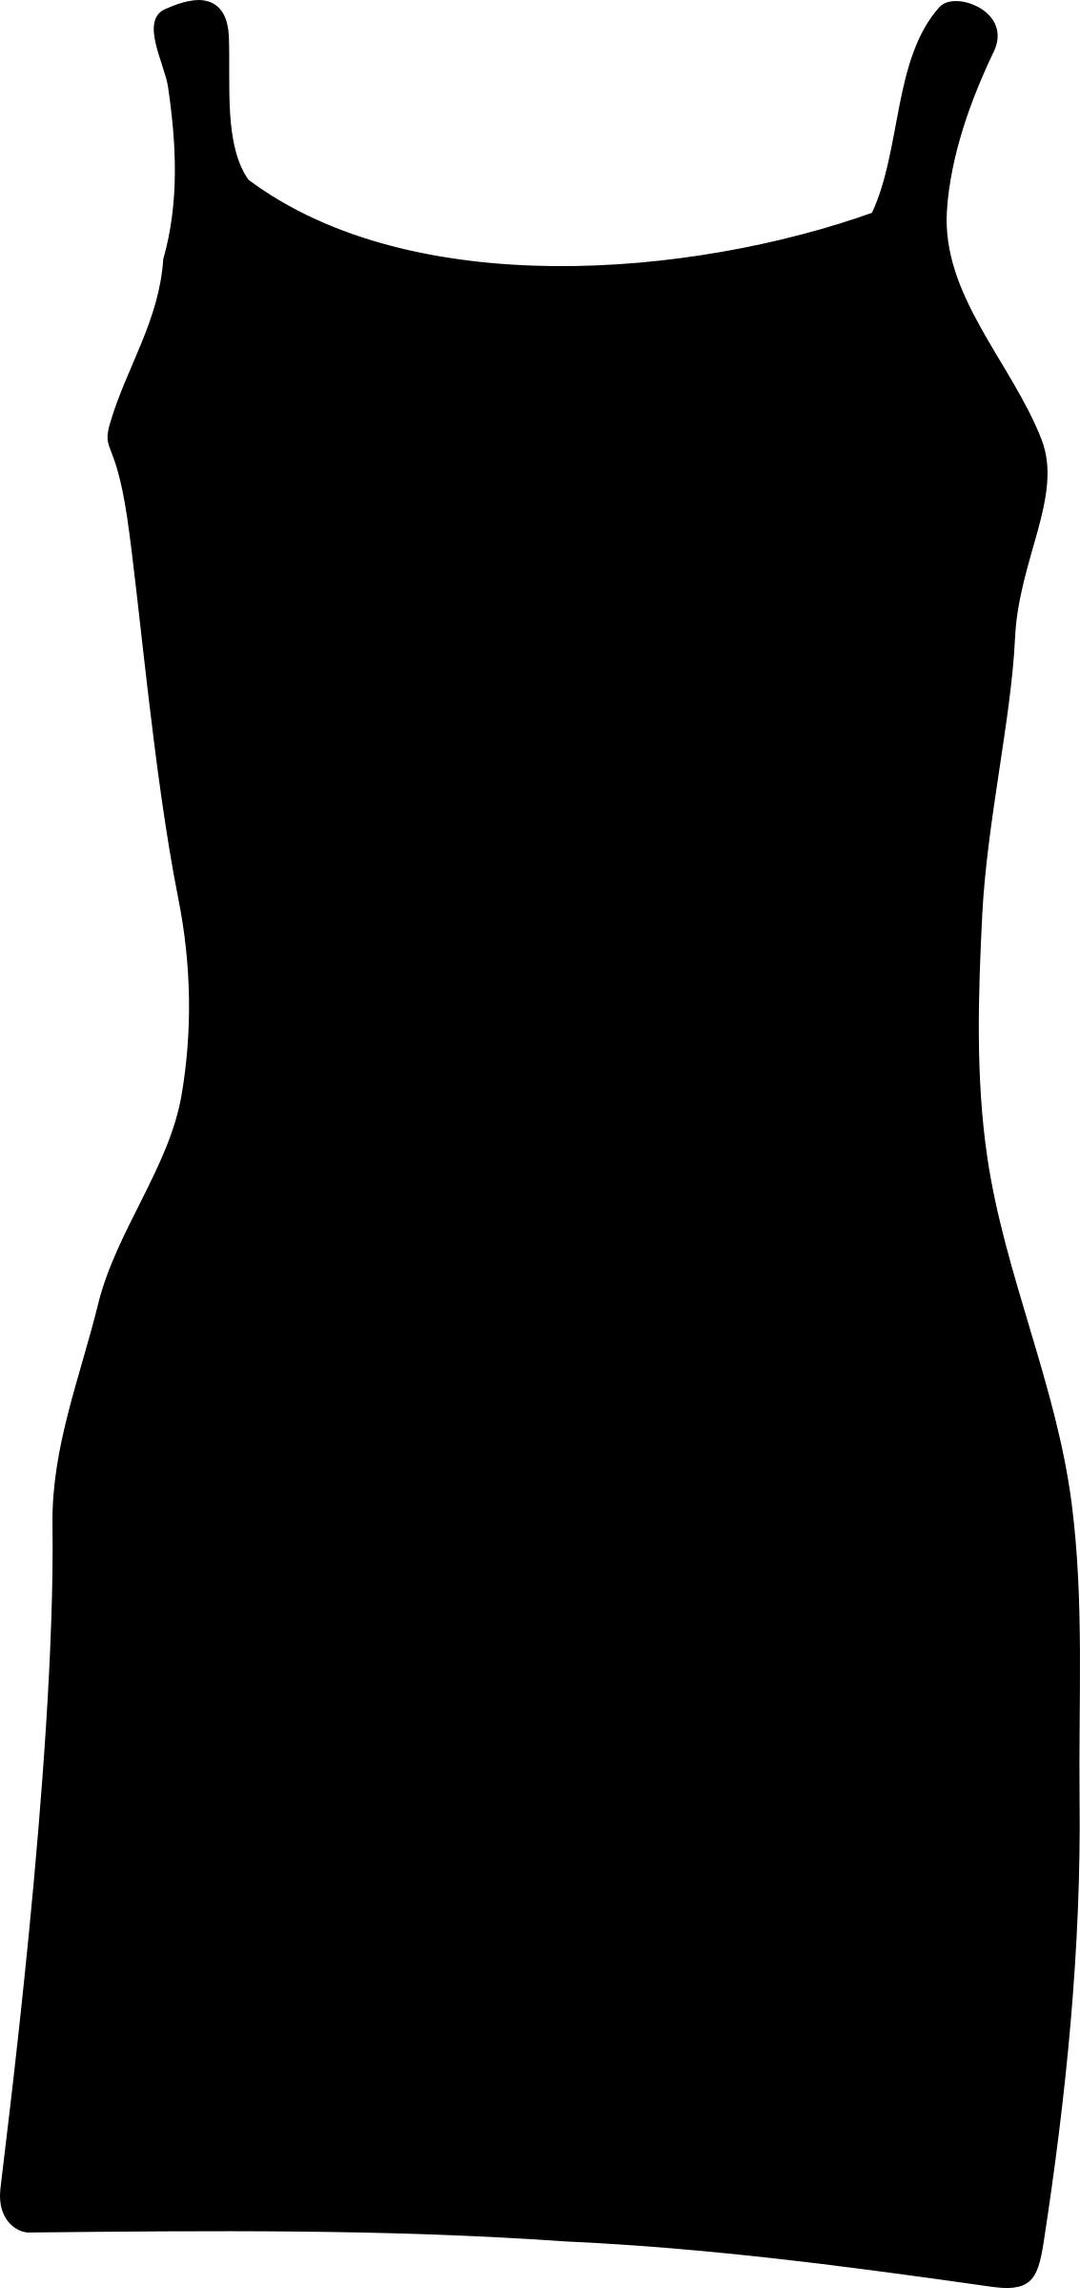 Dress silhouette png transparent